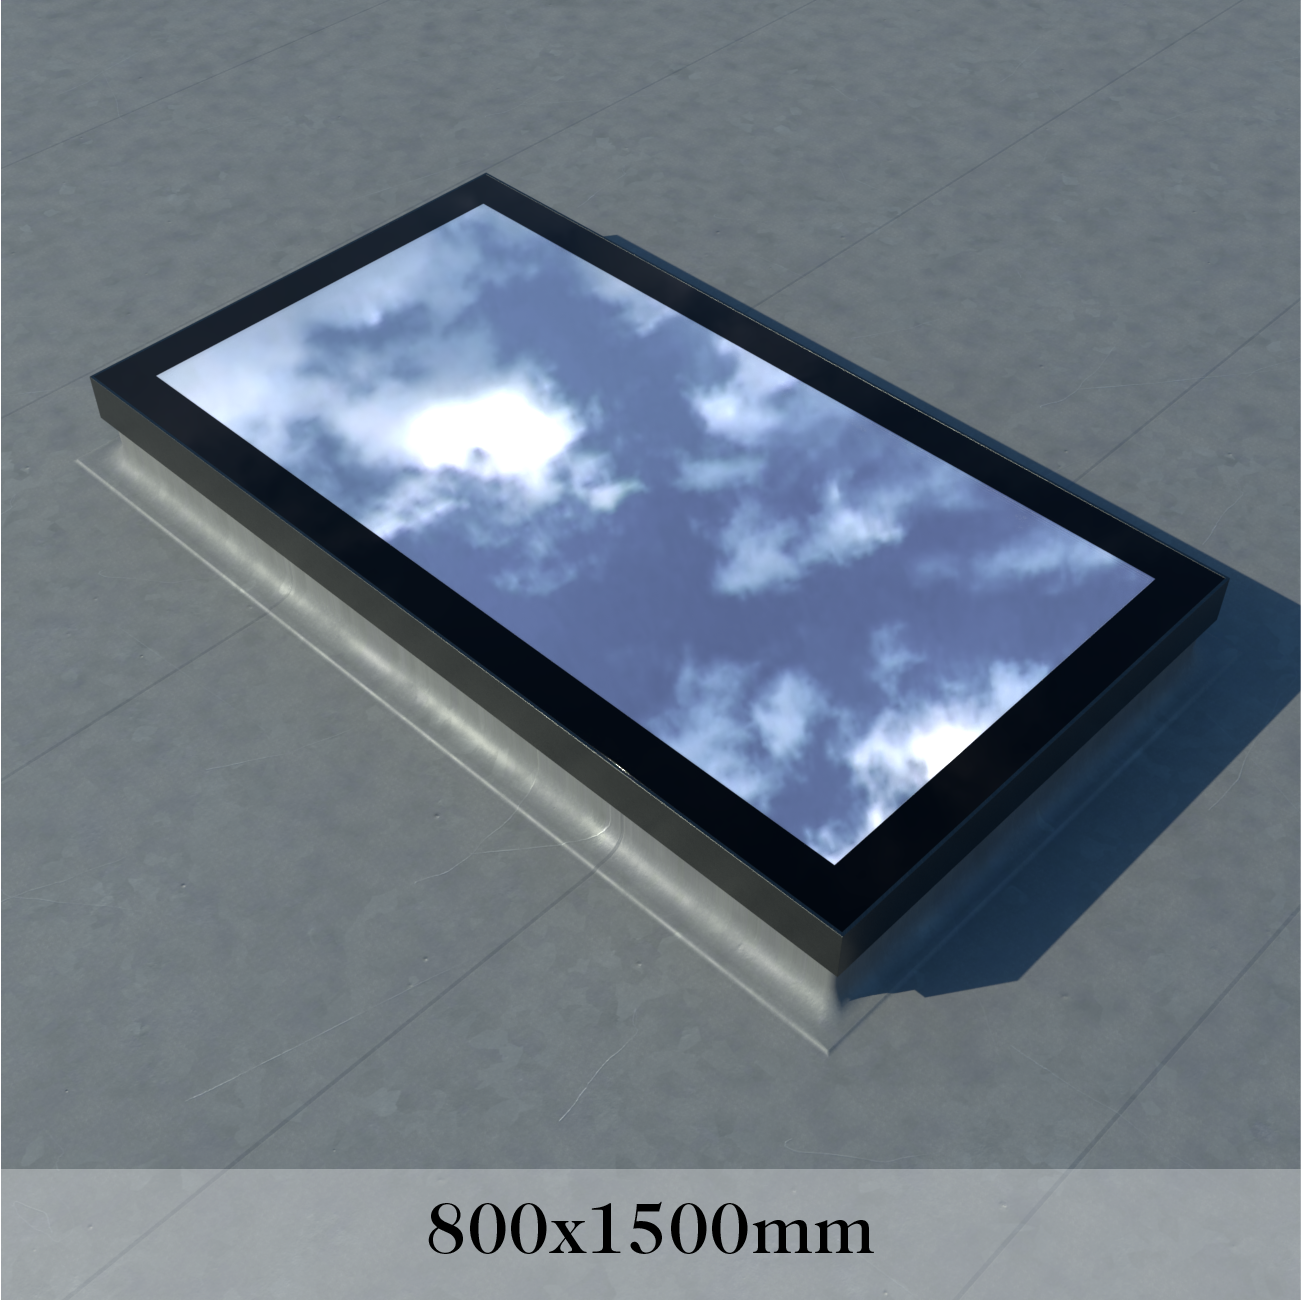 Framed Skylight 800 x 1500 mm – Triple glazed